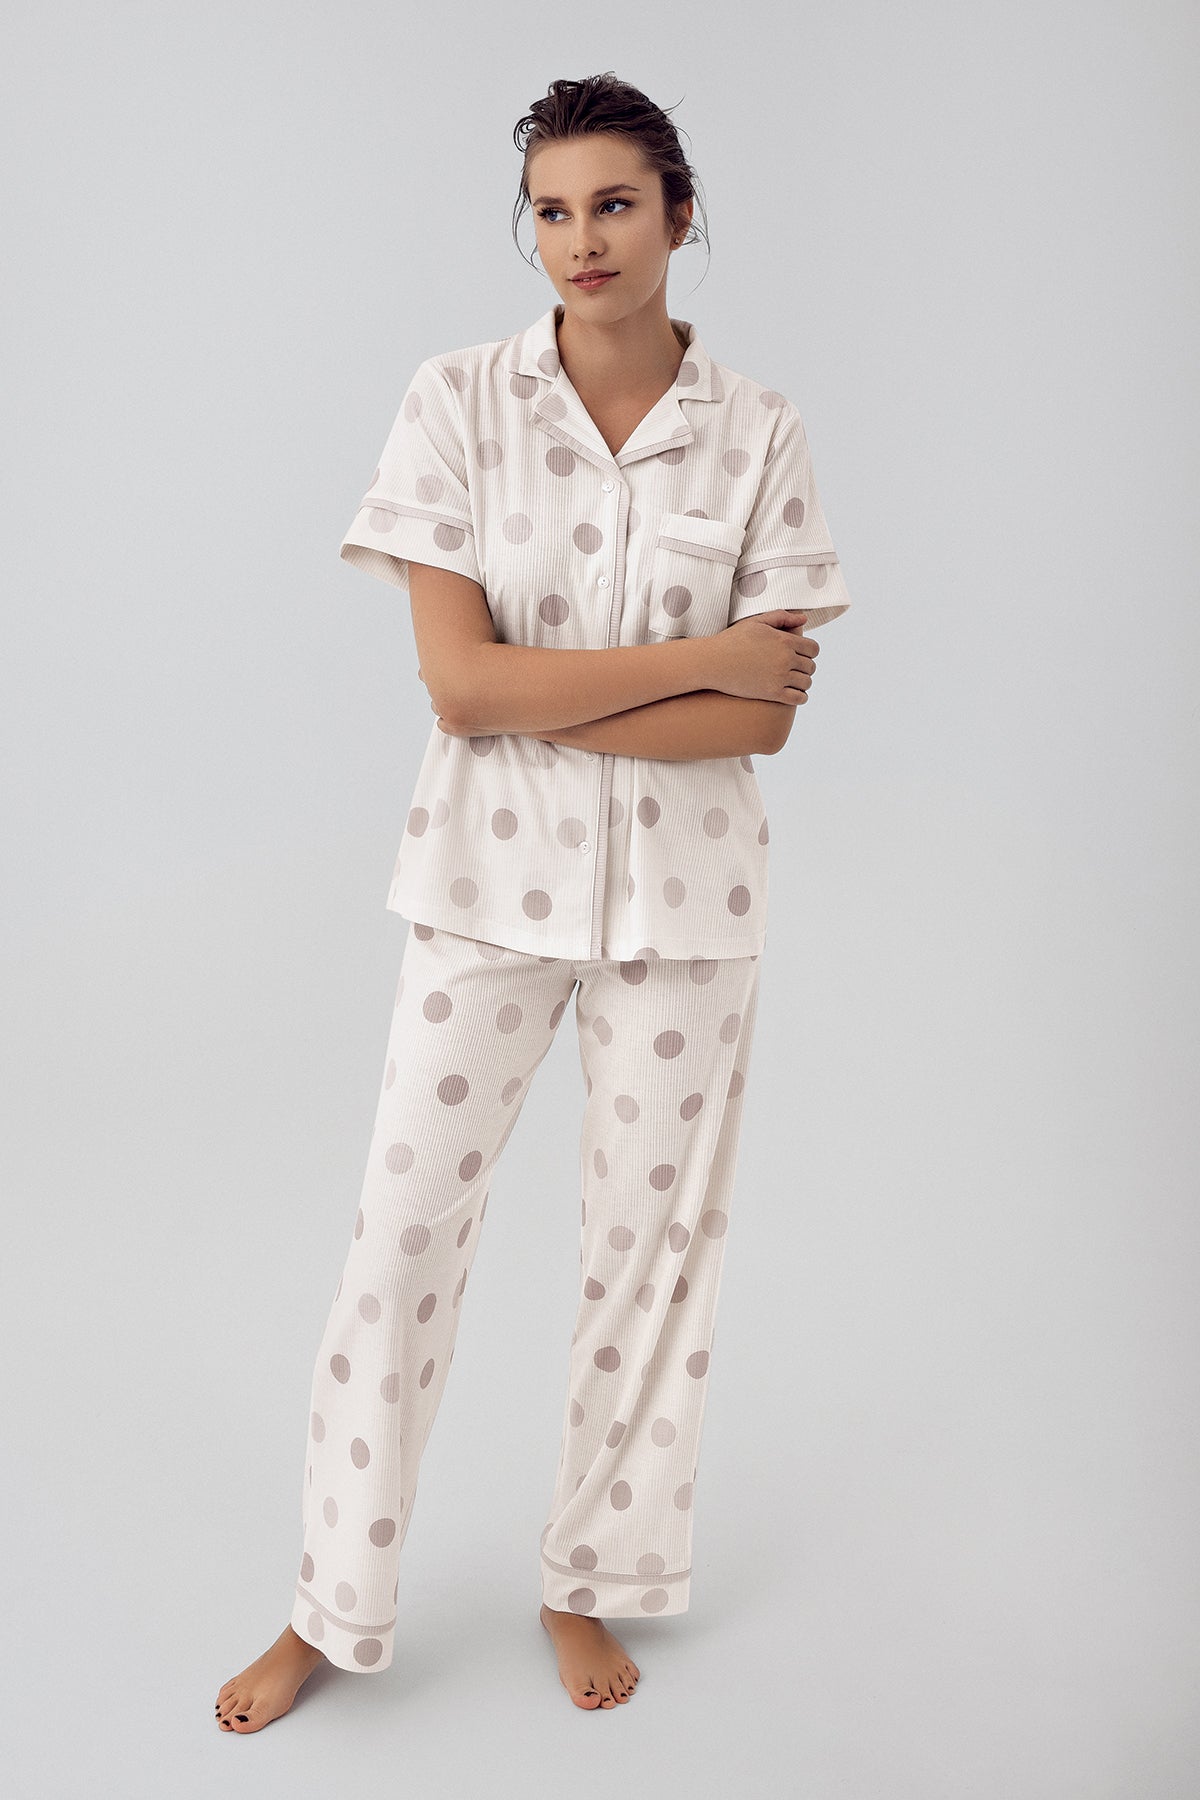 Shopymommy 16310 Polka Dot 3-Pieces Maternity & Nursing Pajamas With Robe Beige